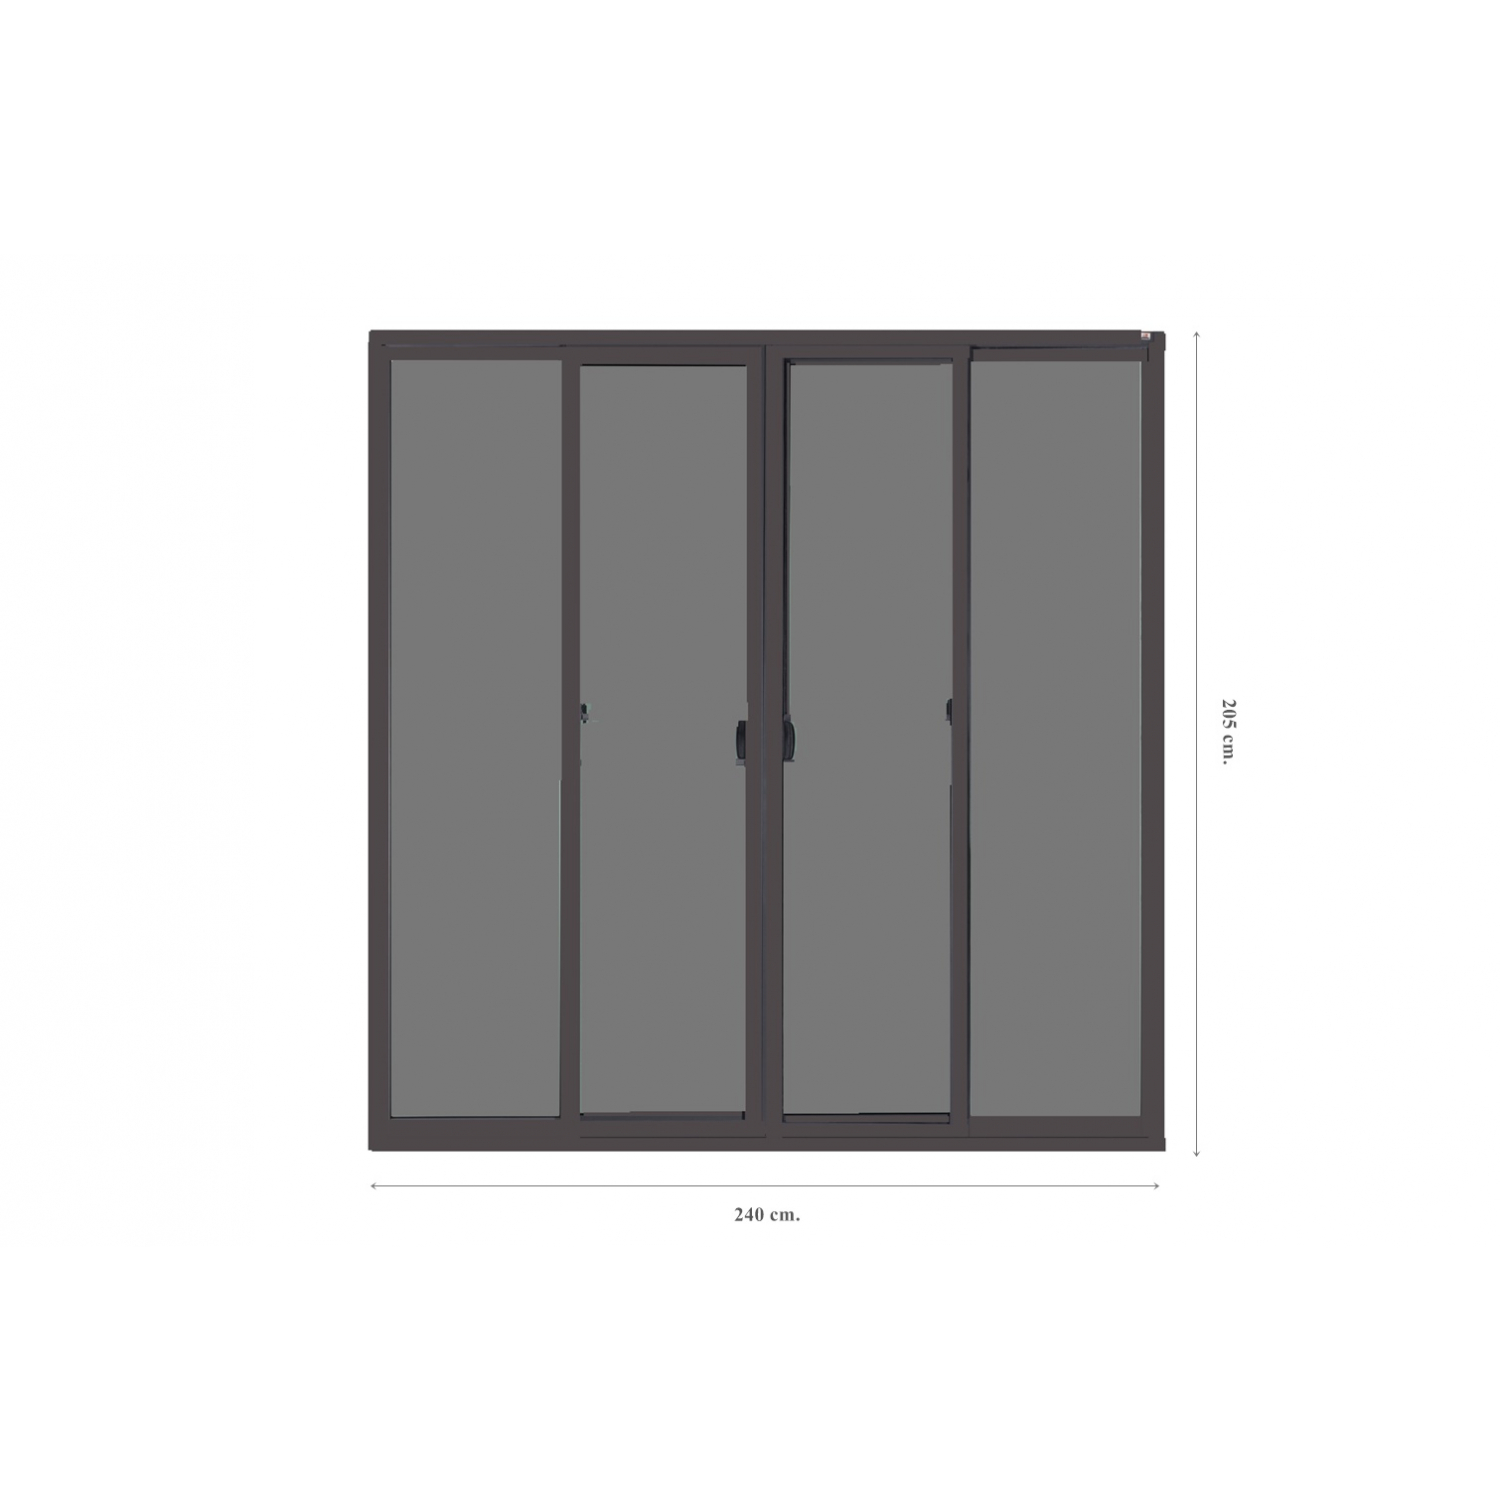 A-PLUS LIKE ประตูบานเลื่อนเปิดกลาง 240 x 205 ซม. สีชา กระจกสีชา ไม่มีมุ้ง  